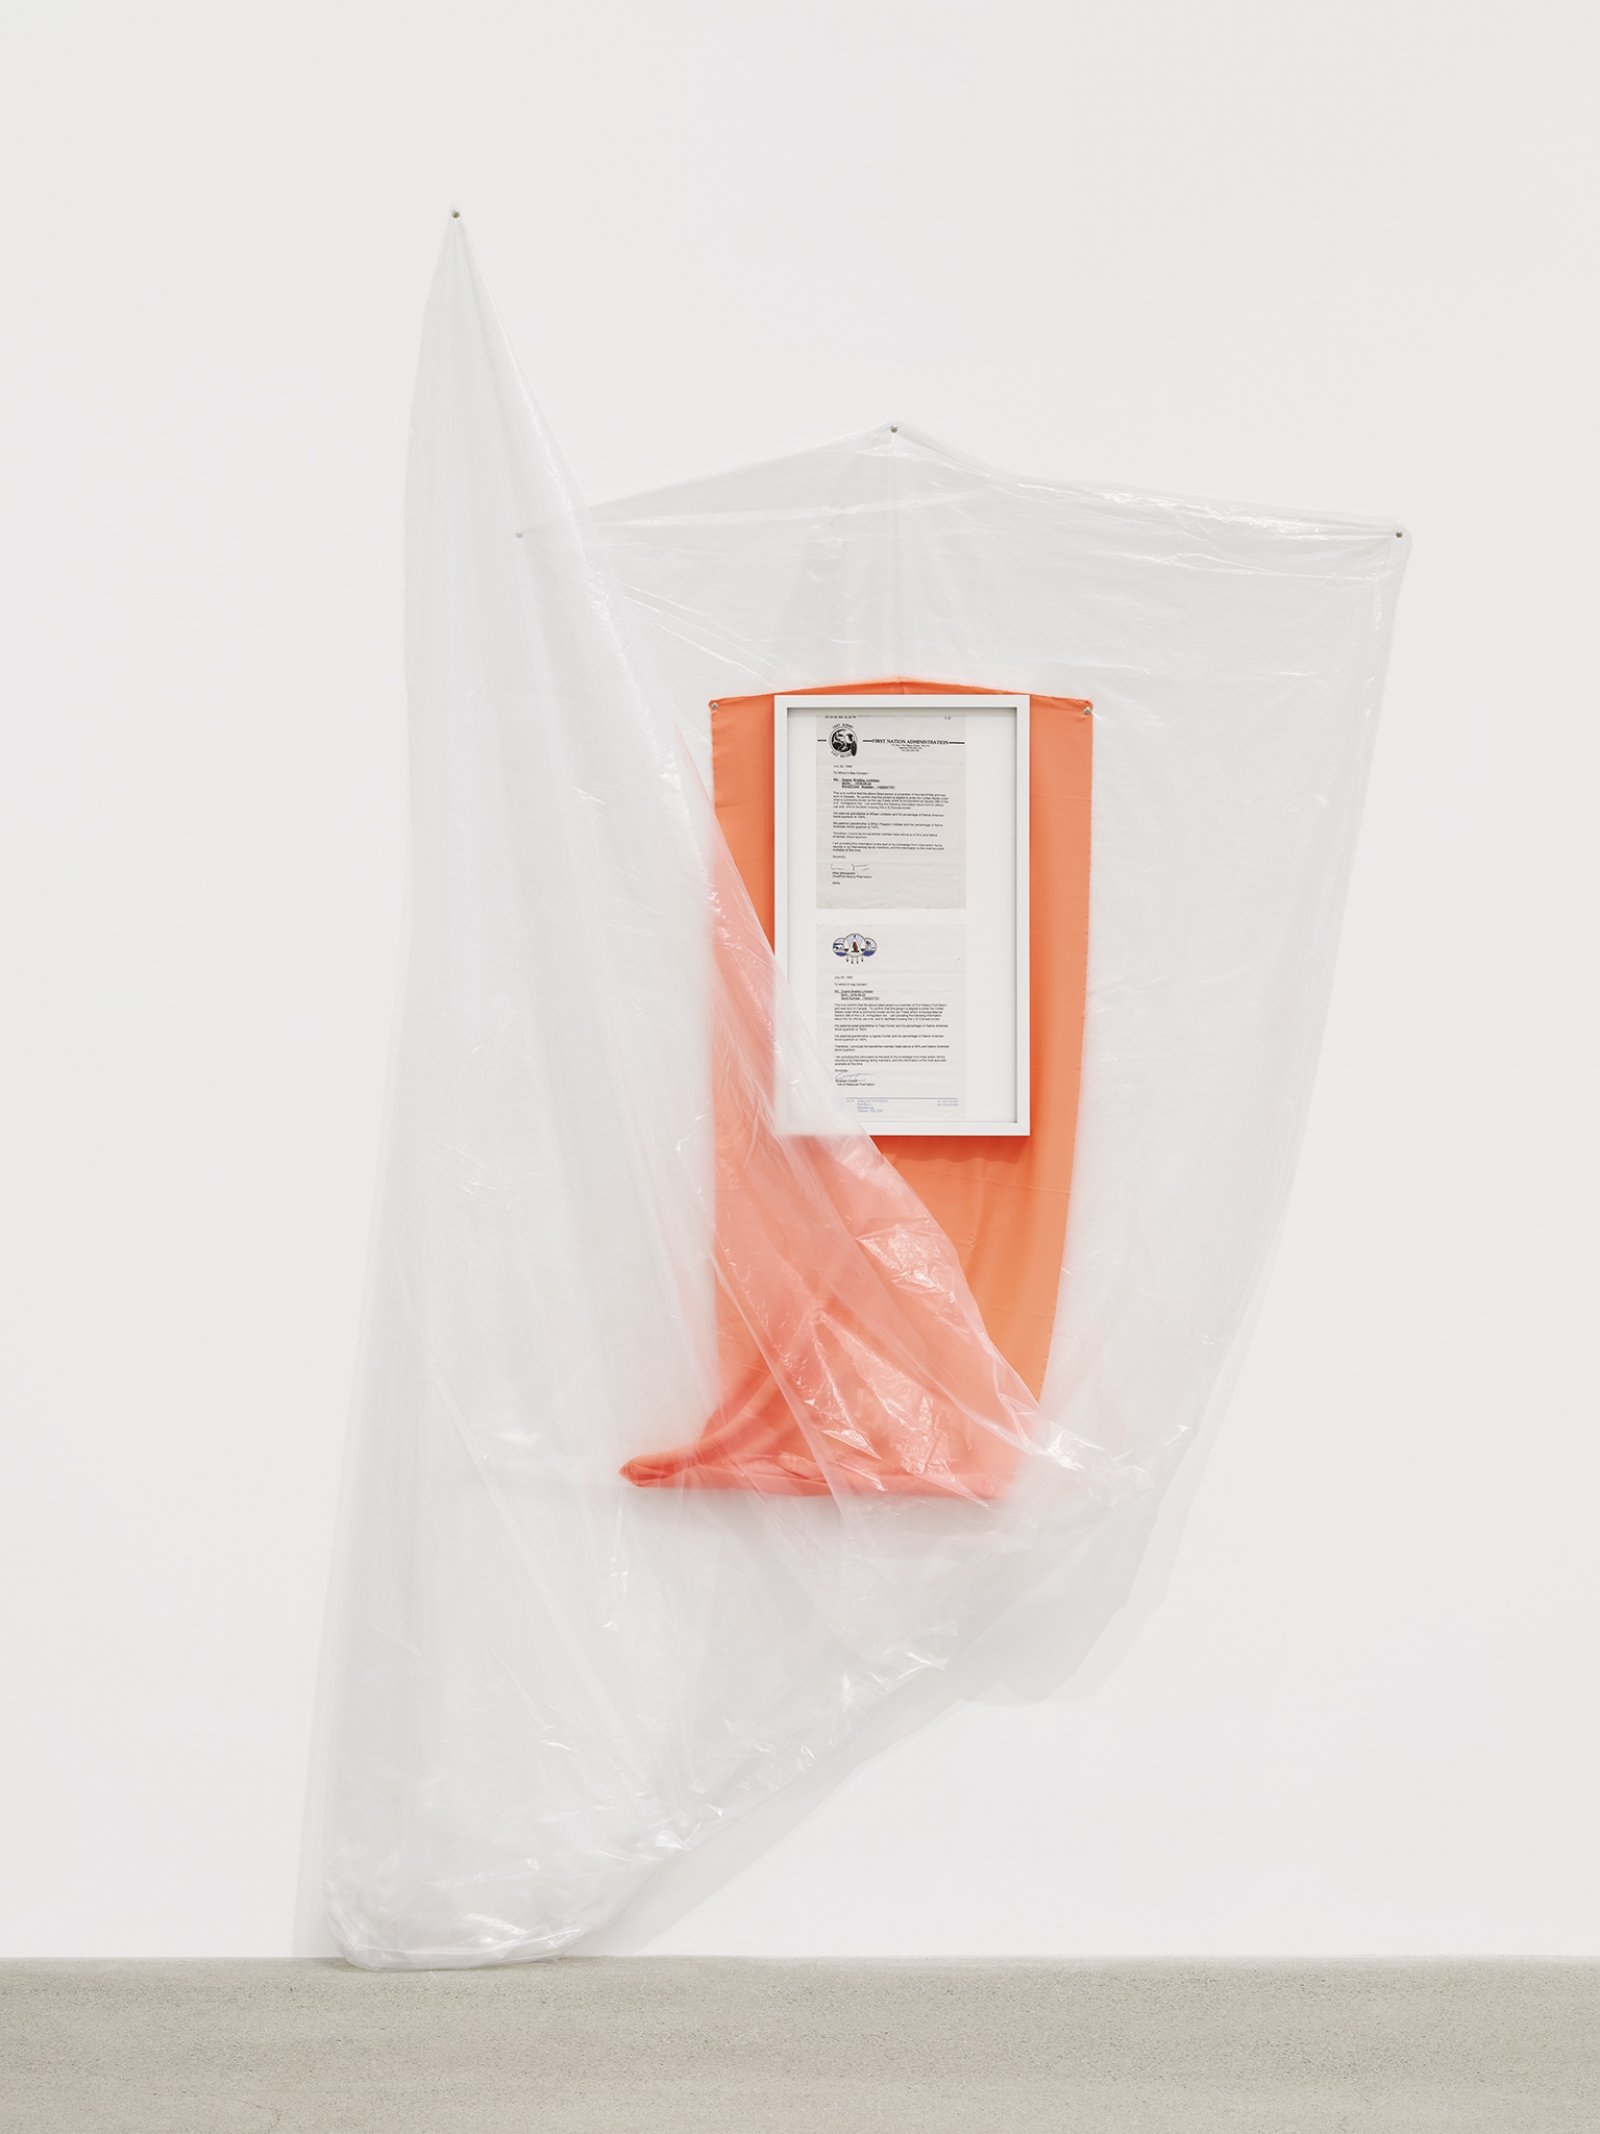 Duane Linklater, border, 2016, plastic sheeting, cotton cloth, nails, thumb tacks, framed digital print, 98 x 57 x 12 in. (249 x 145 x 31 cm)